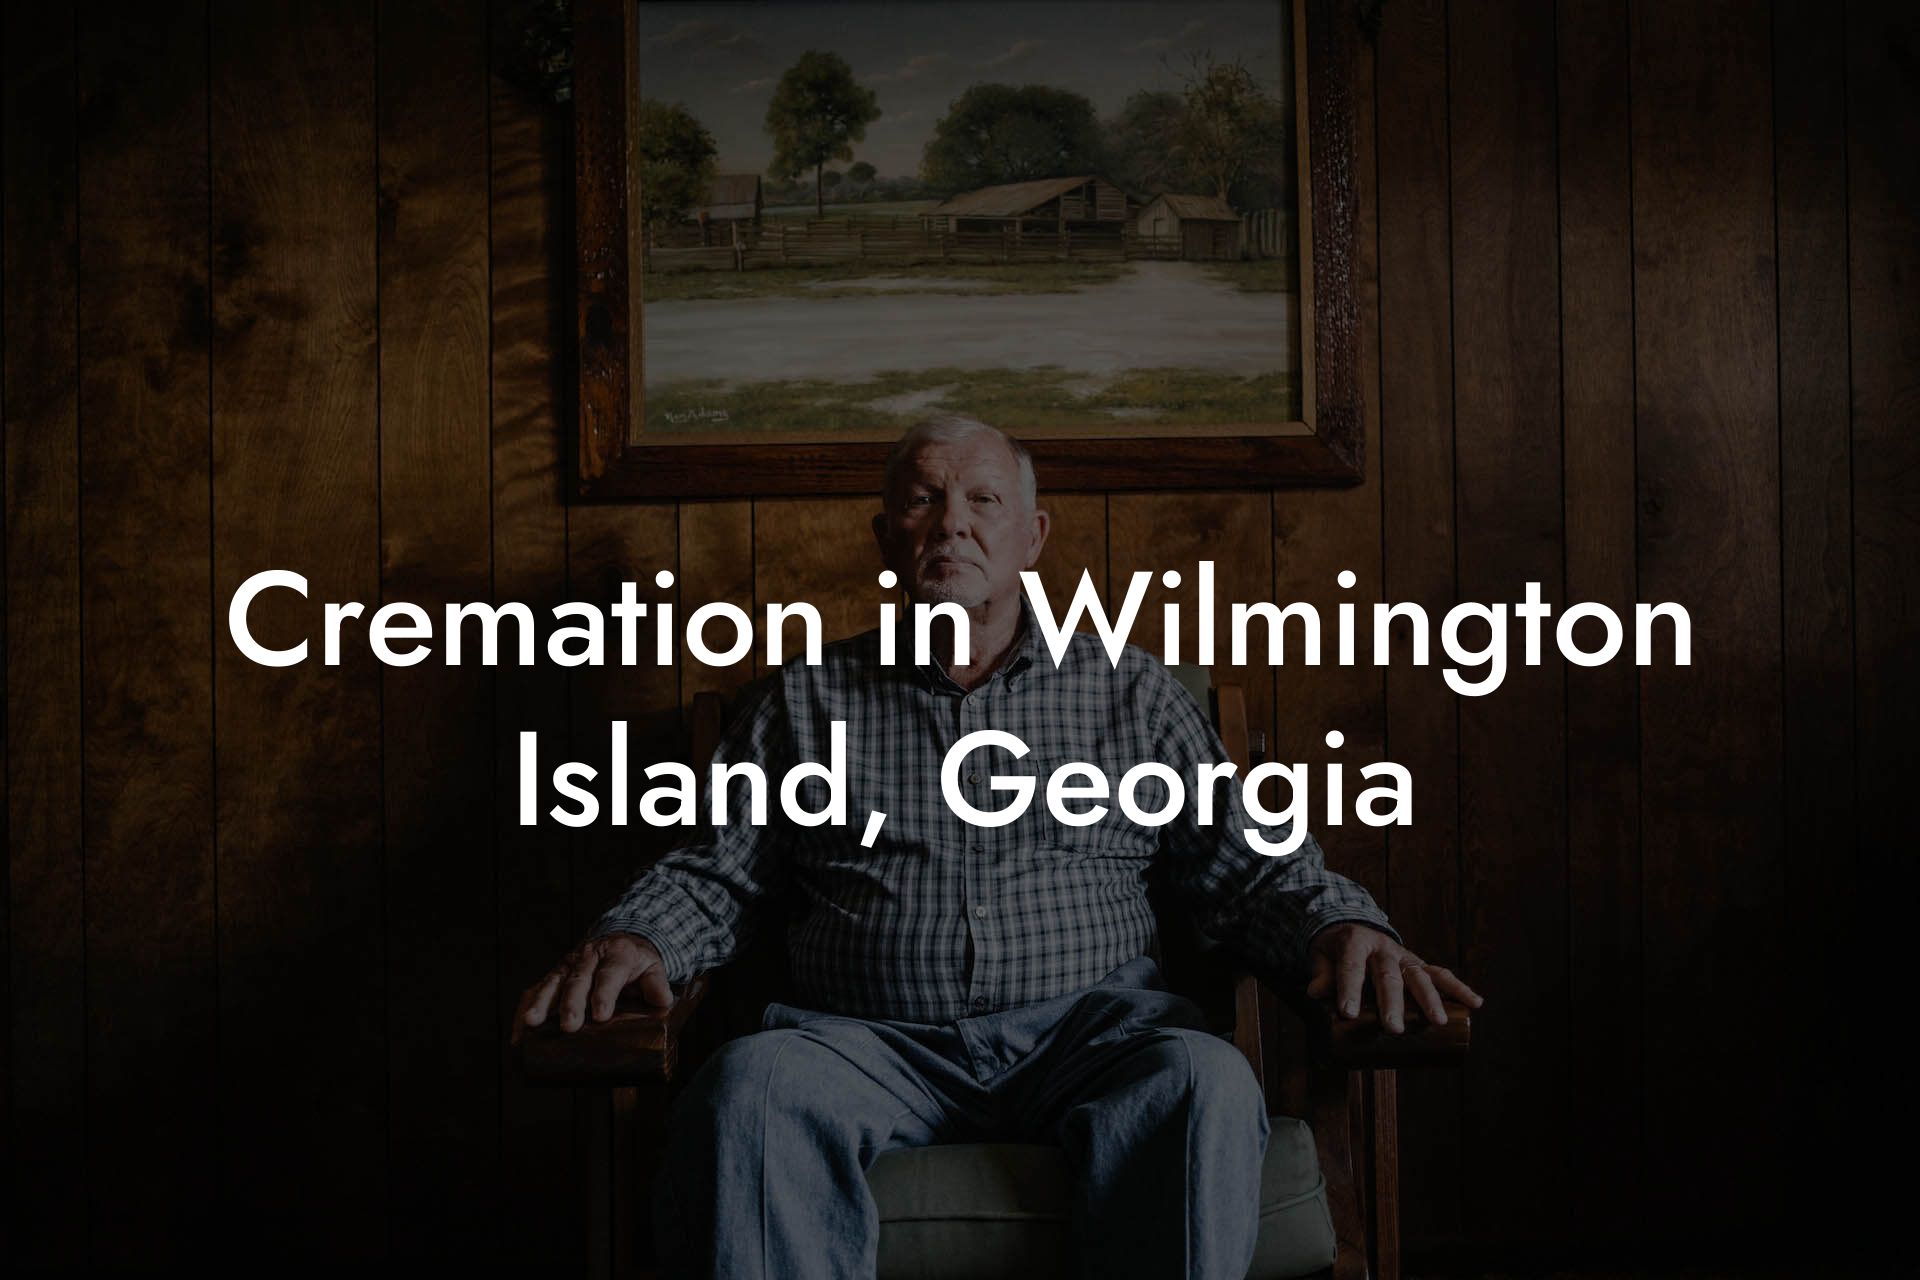 Cremation in Wilmington Island, Georgia